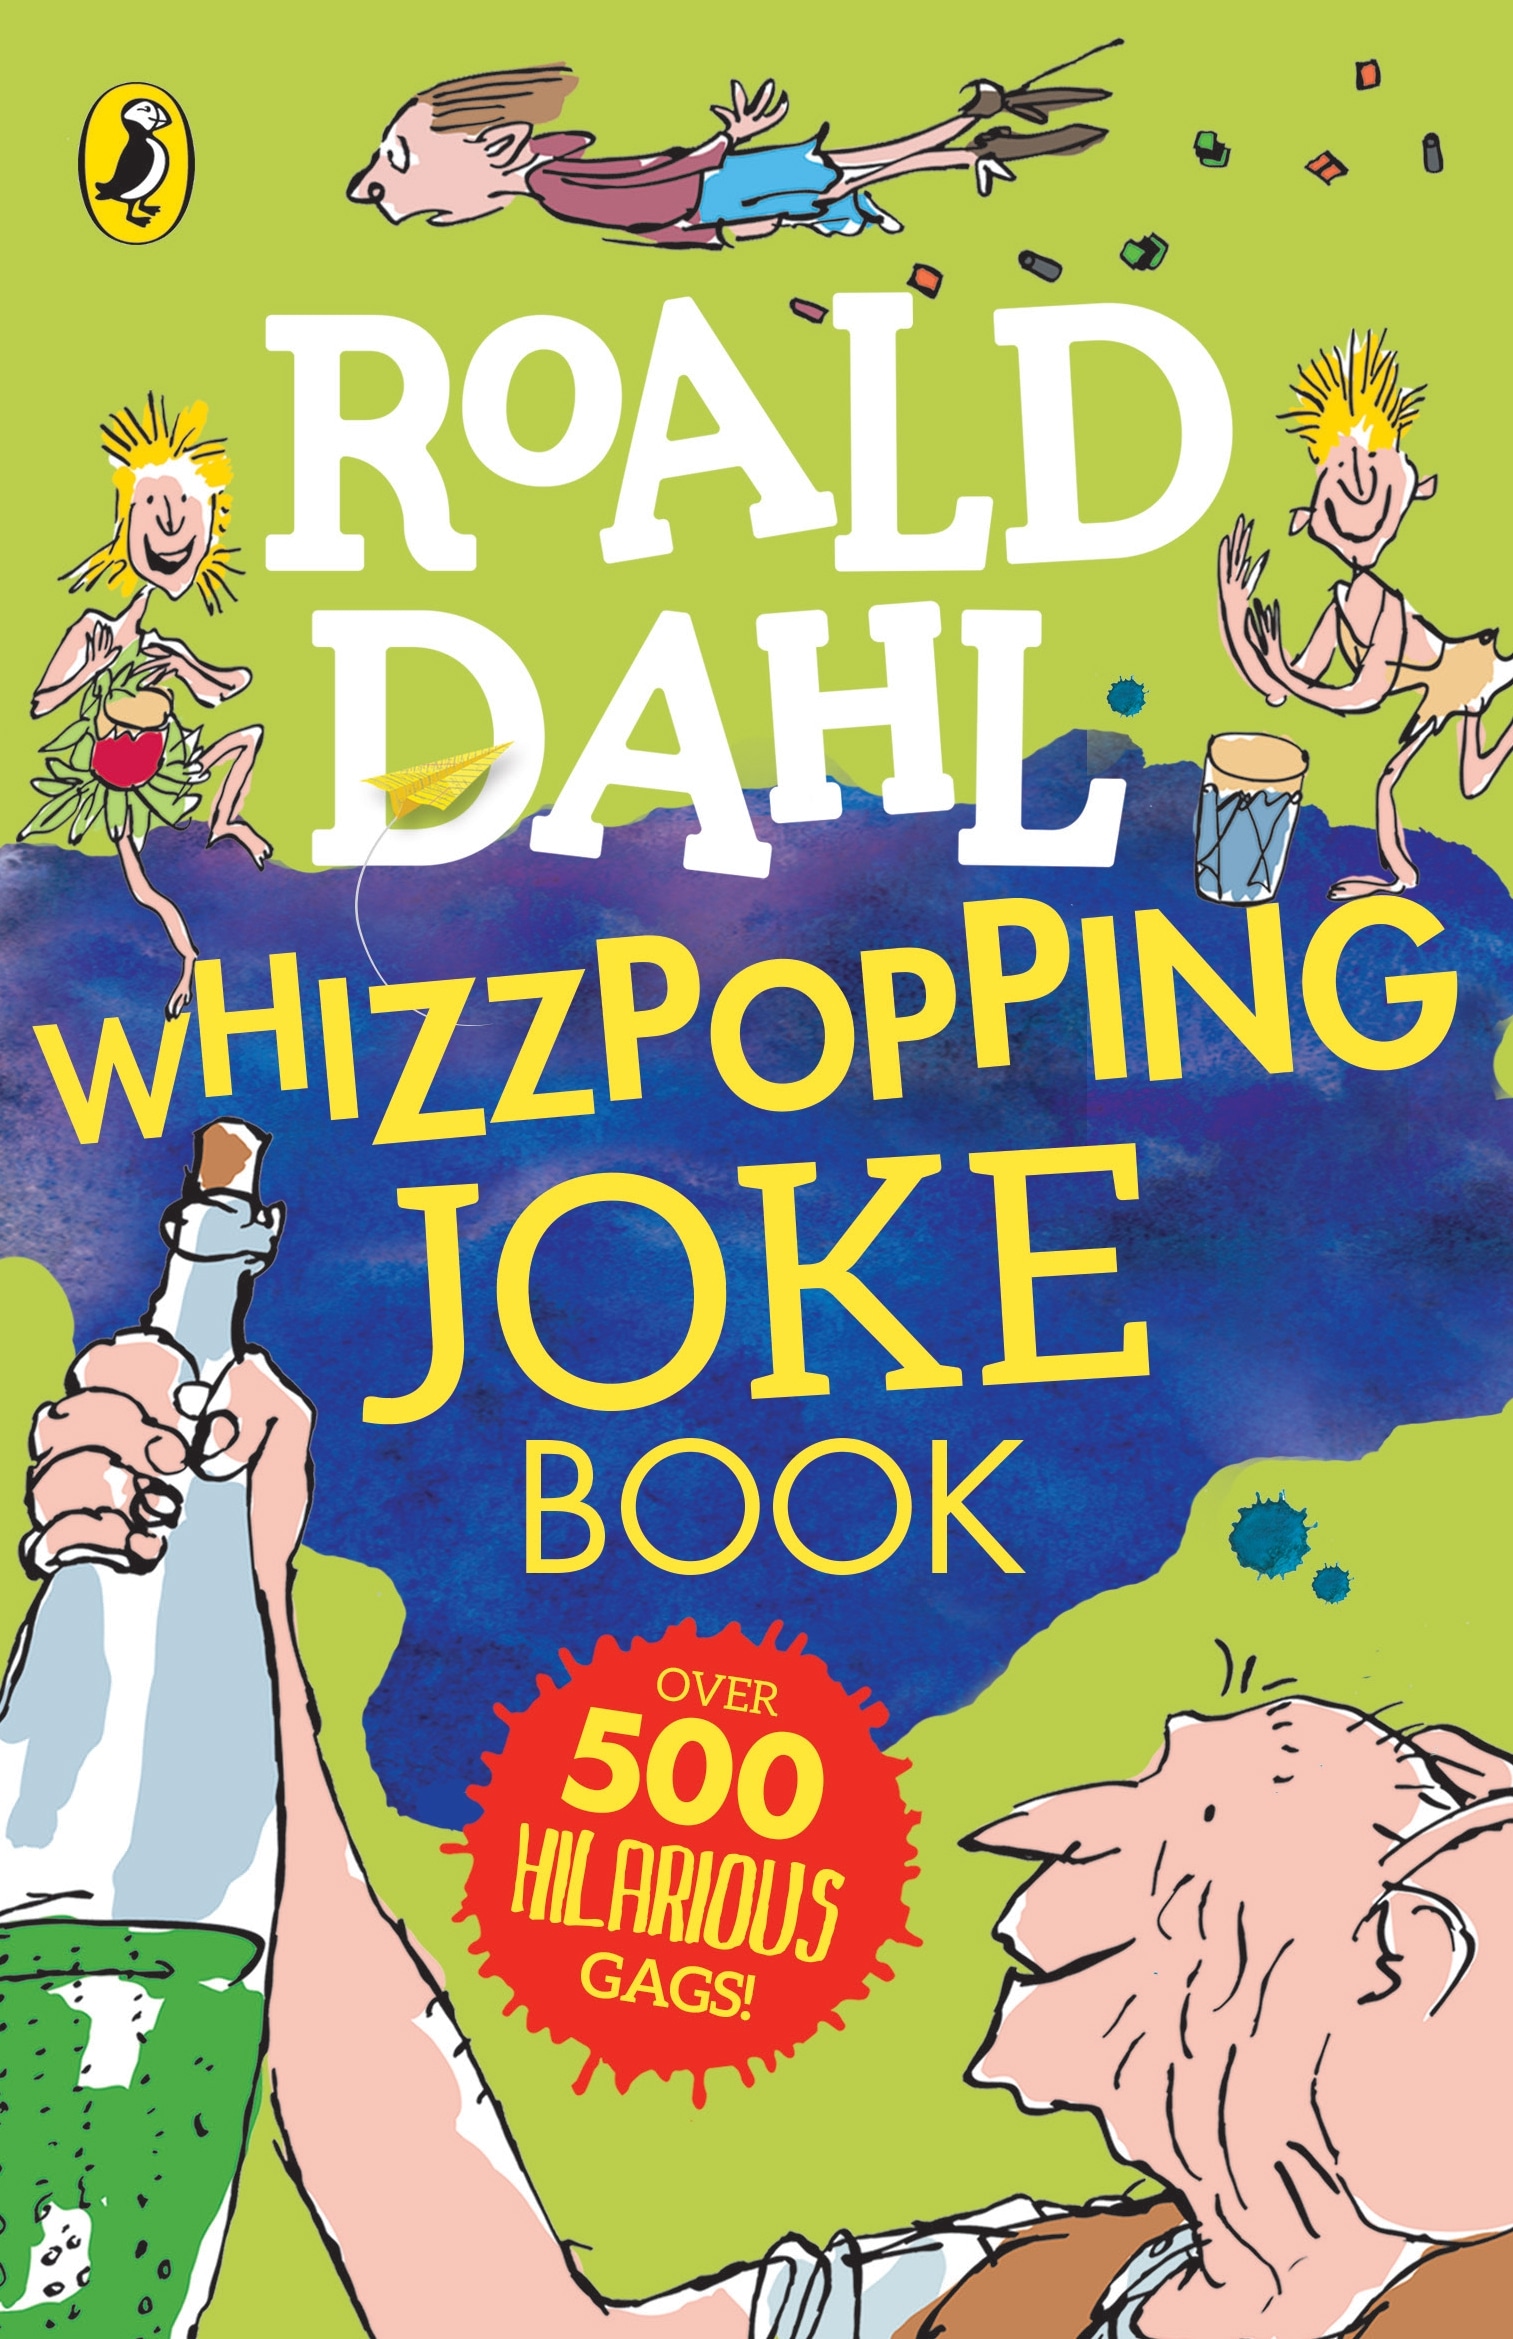 Book “Roald Dahl: Whizzpopping Joke Book” by Roald Dahl — June 2, 2016